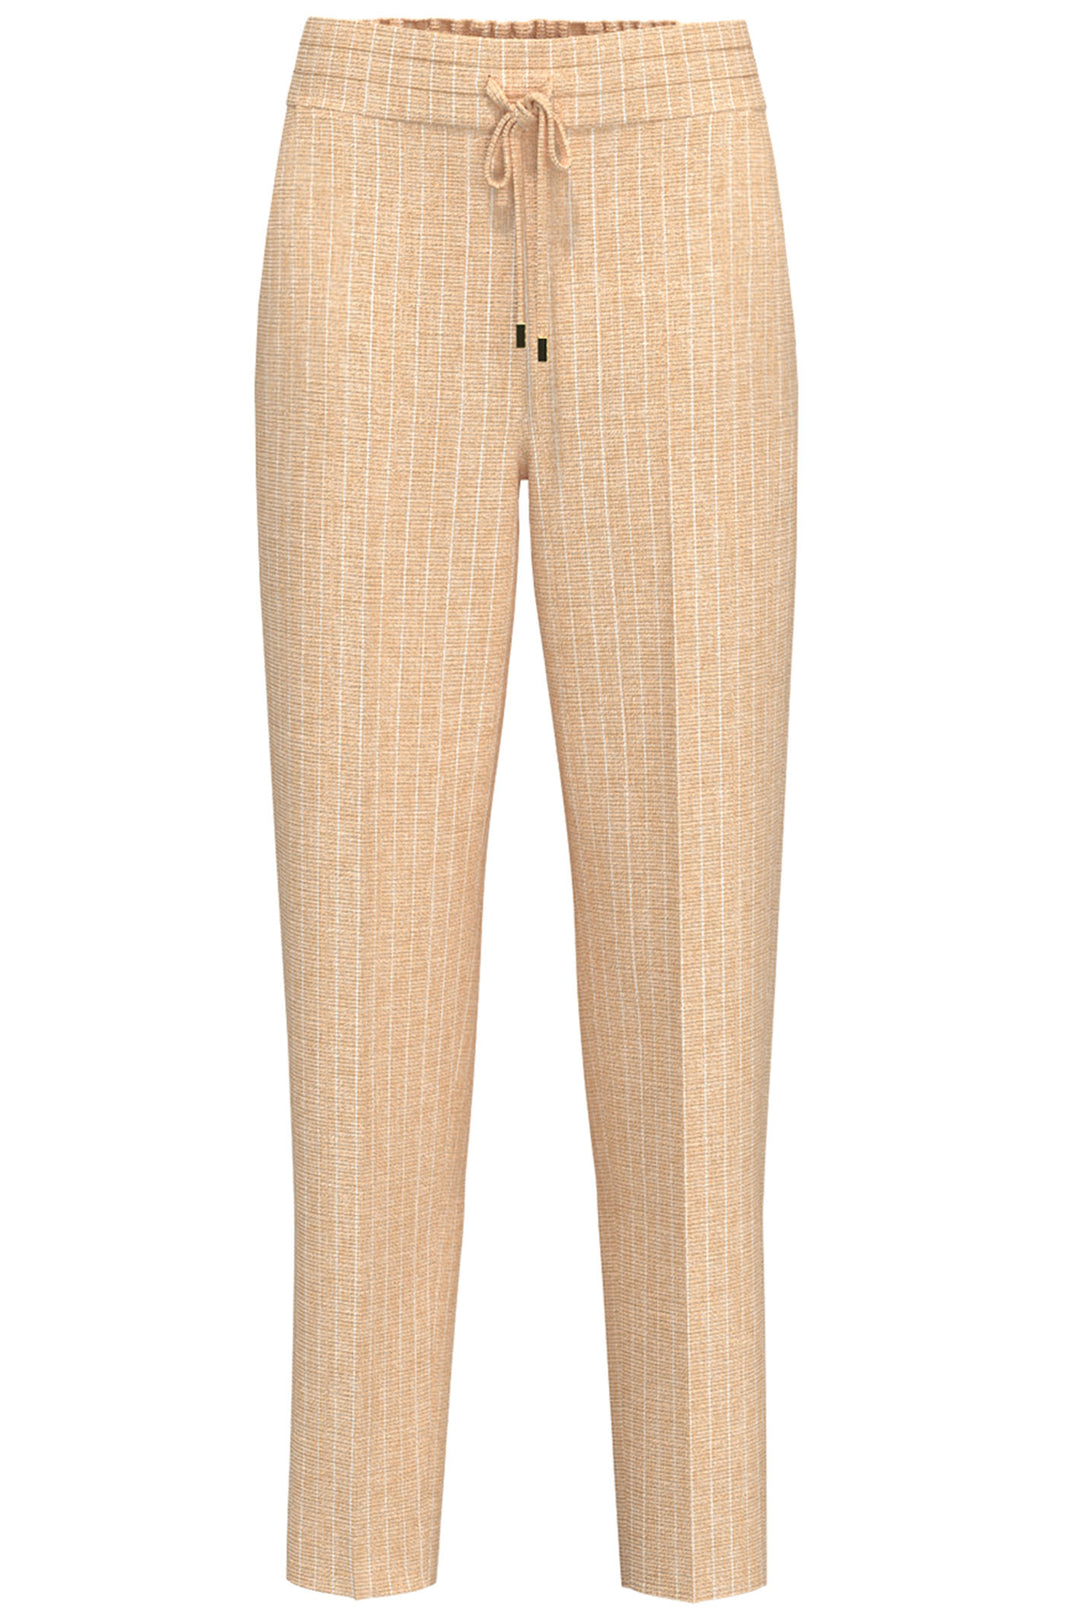 Emme Jerry 2415131111200 Beige Pinstripe Trousers - Olivia Grace Fashion